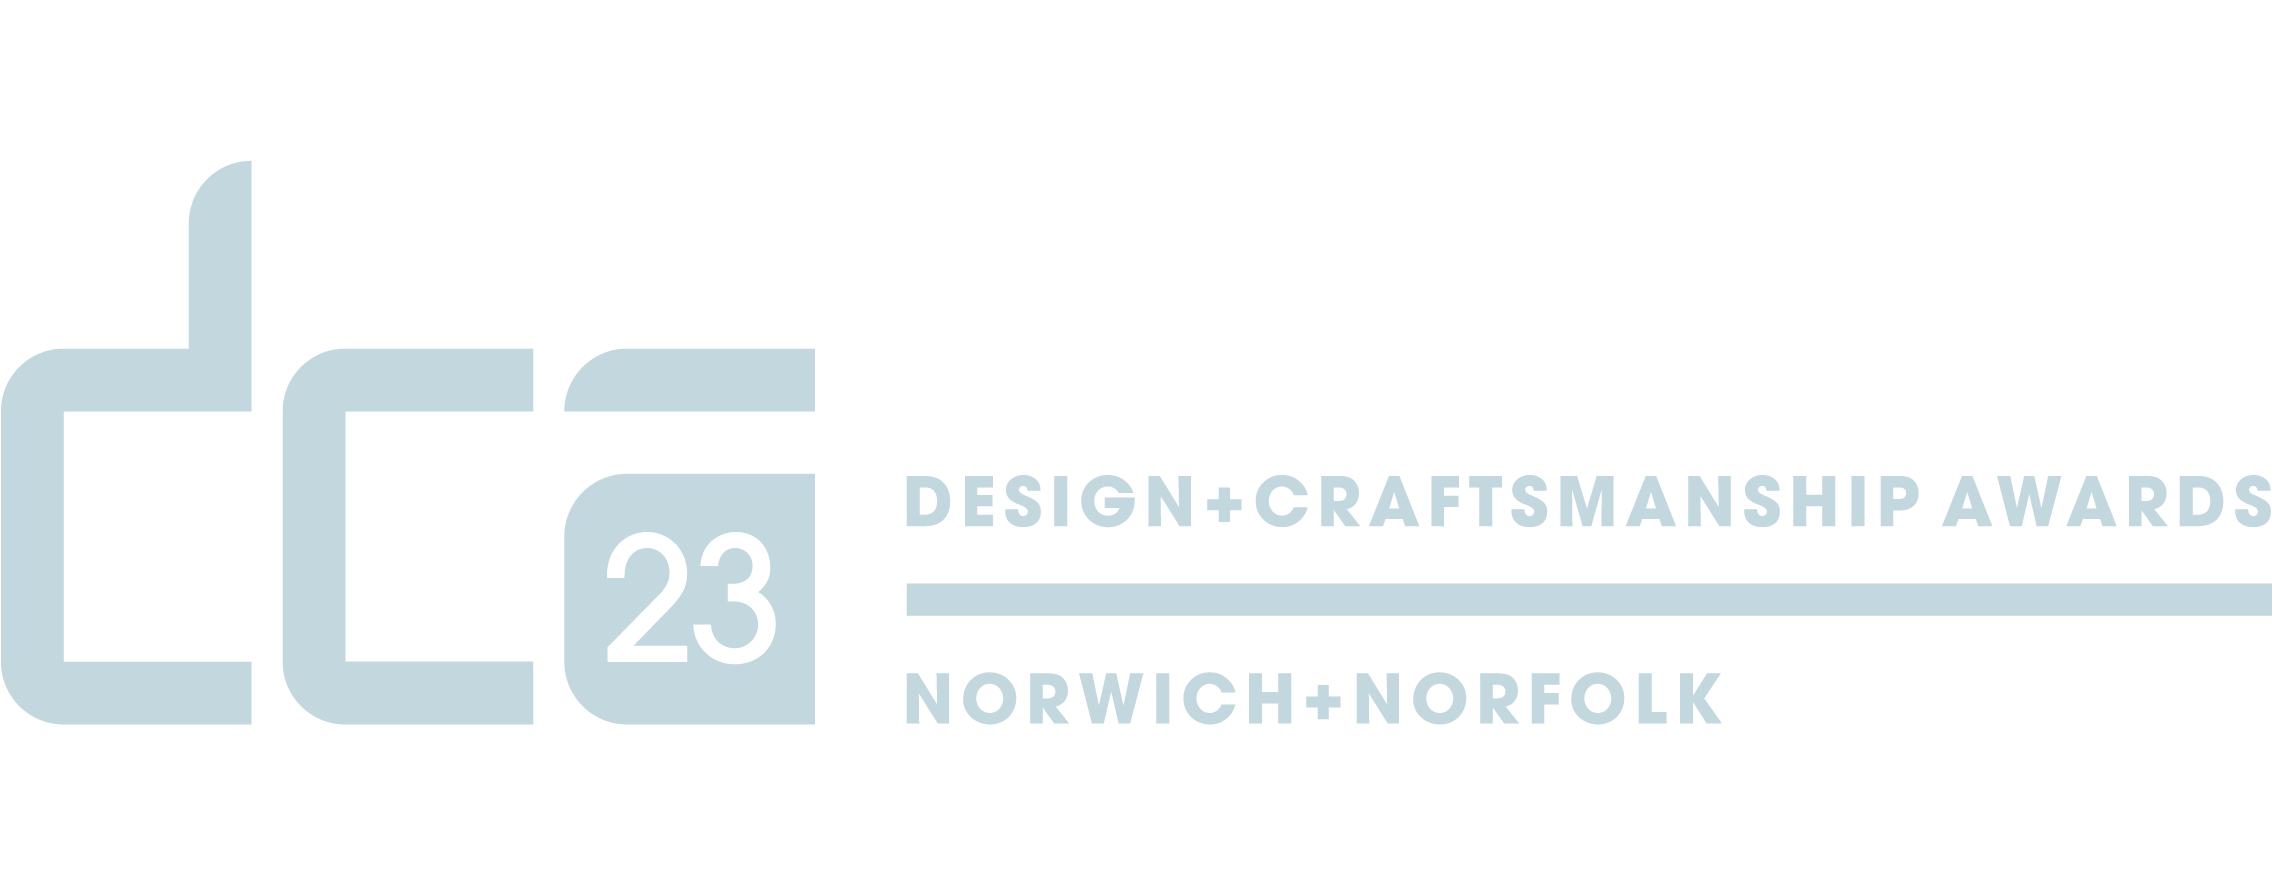 The Design & Craftsmanship Awards 2021